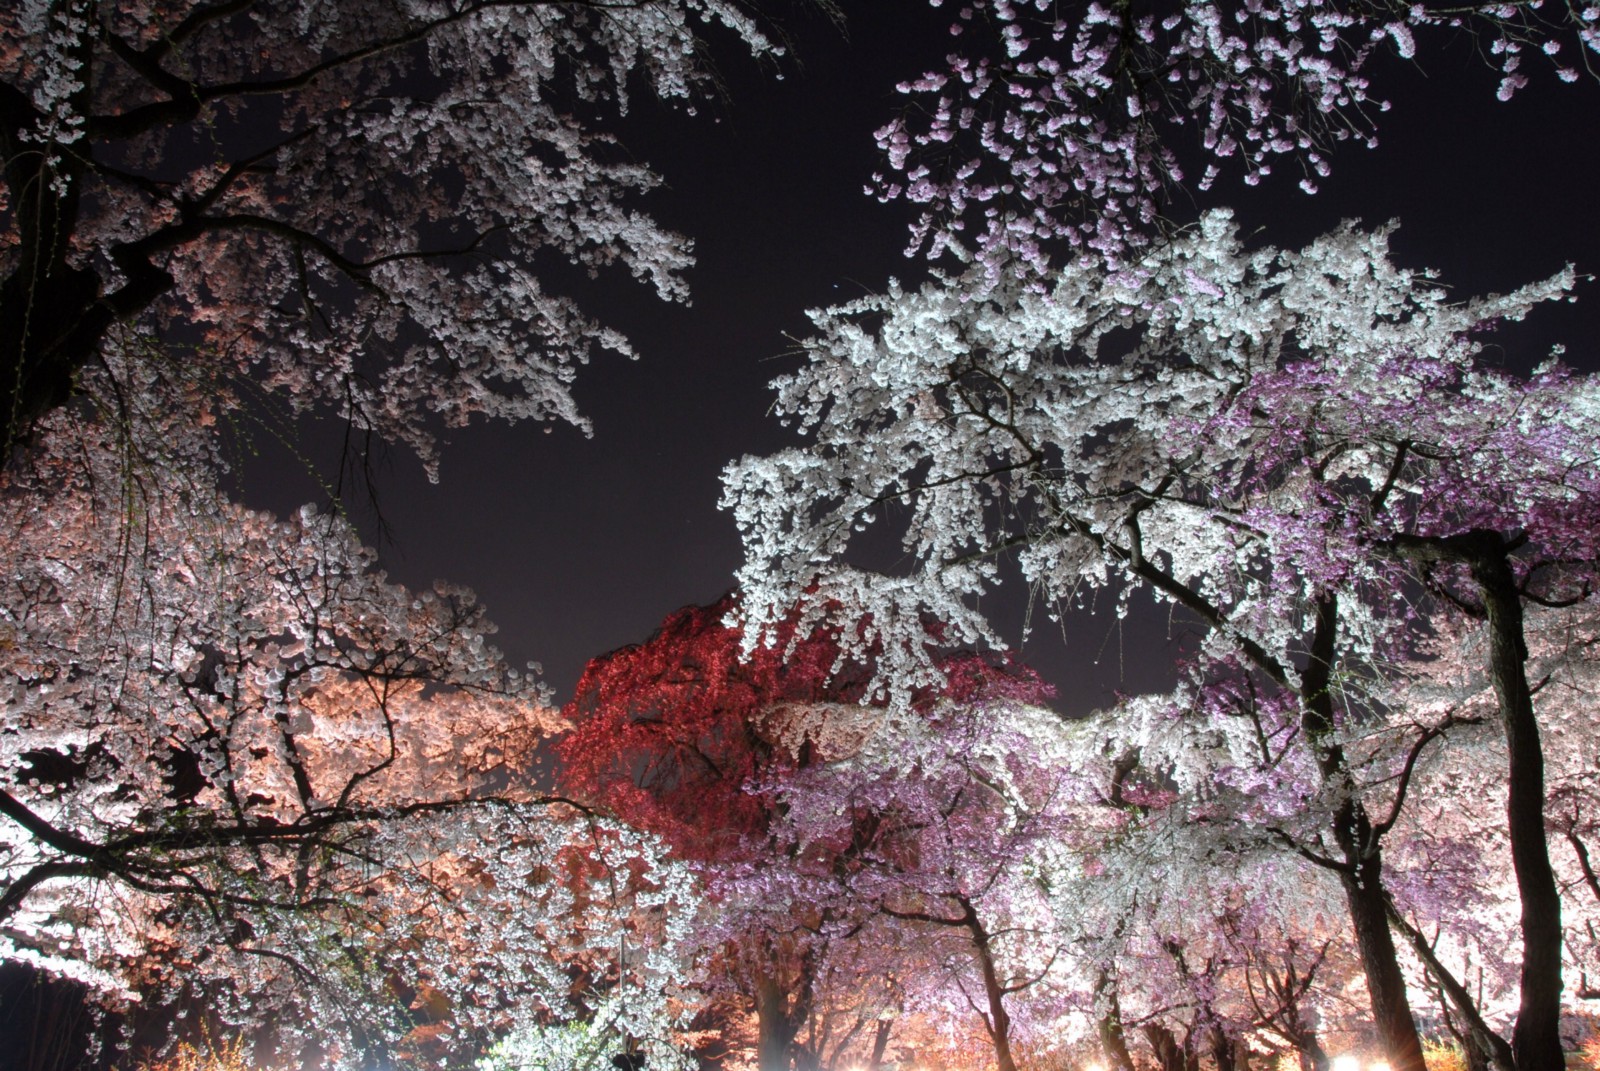 kyoto botanical garden cherry blossoms 2019 - japan web magazine